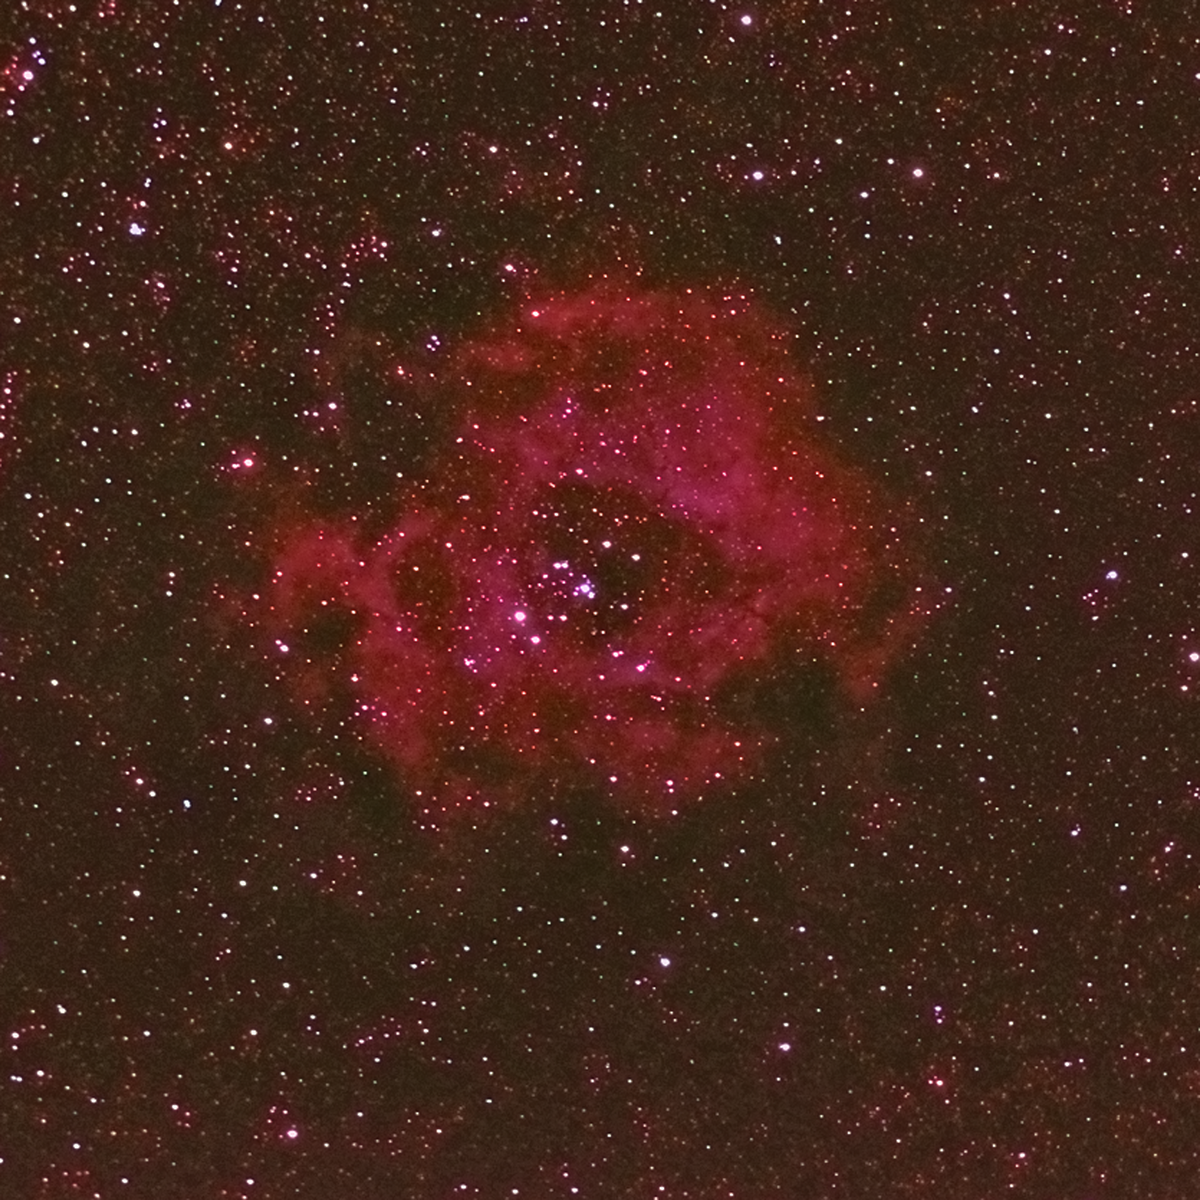 Rosette Nebula NGC2244 best.png